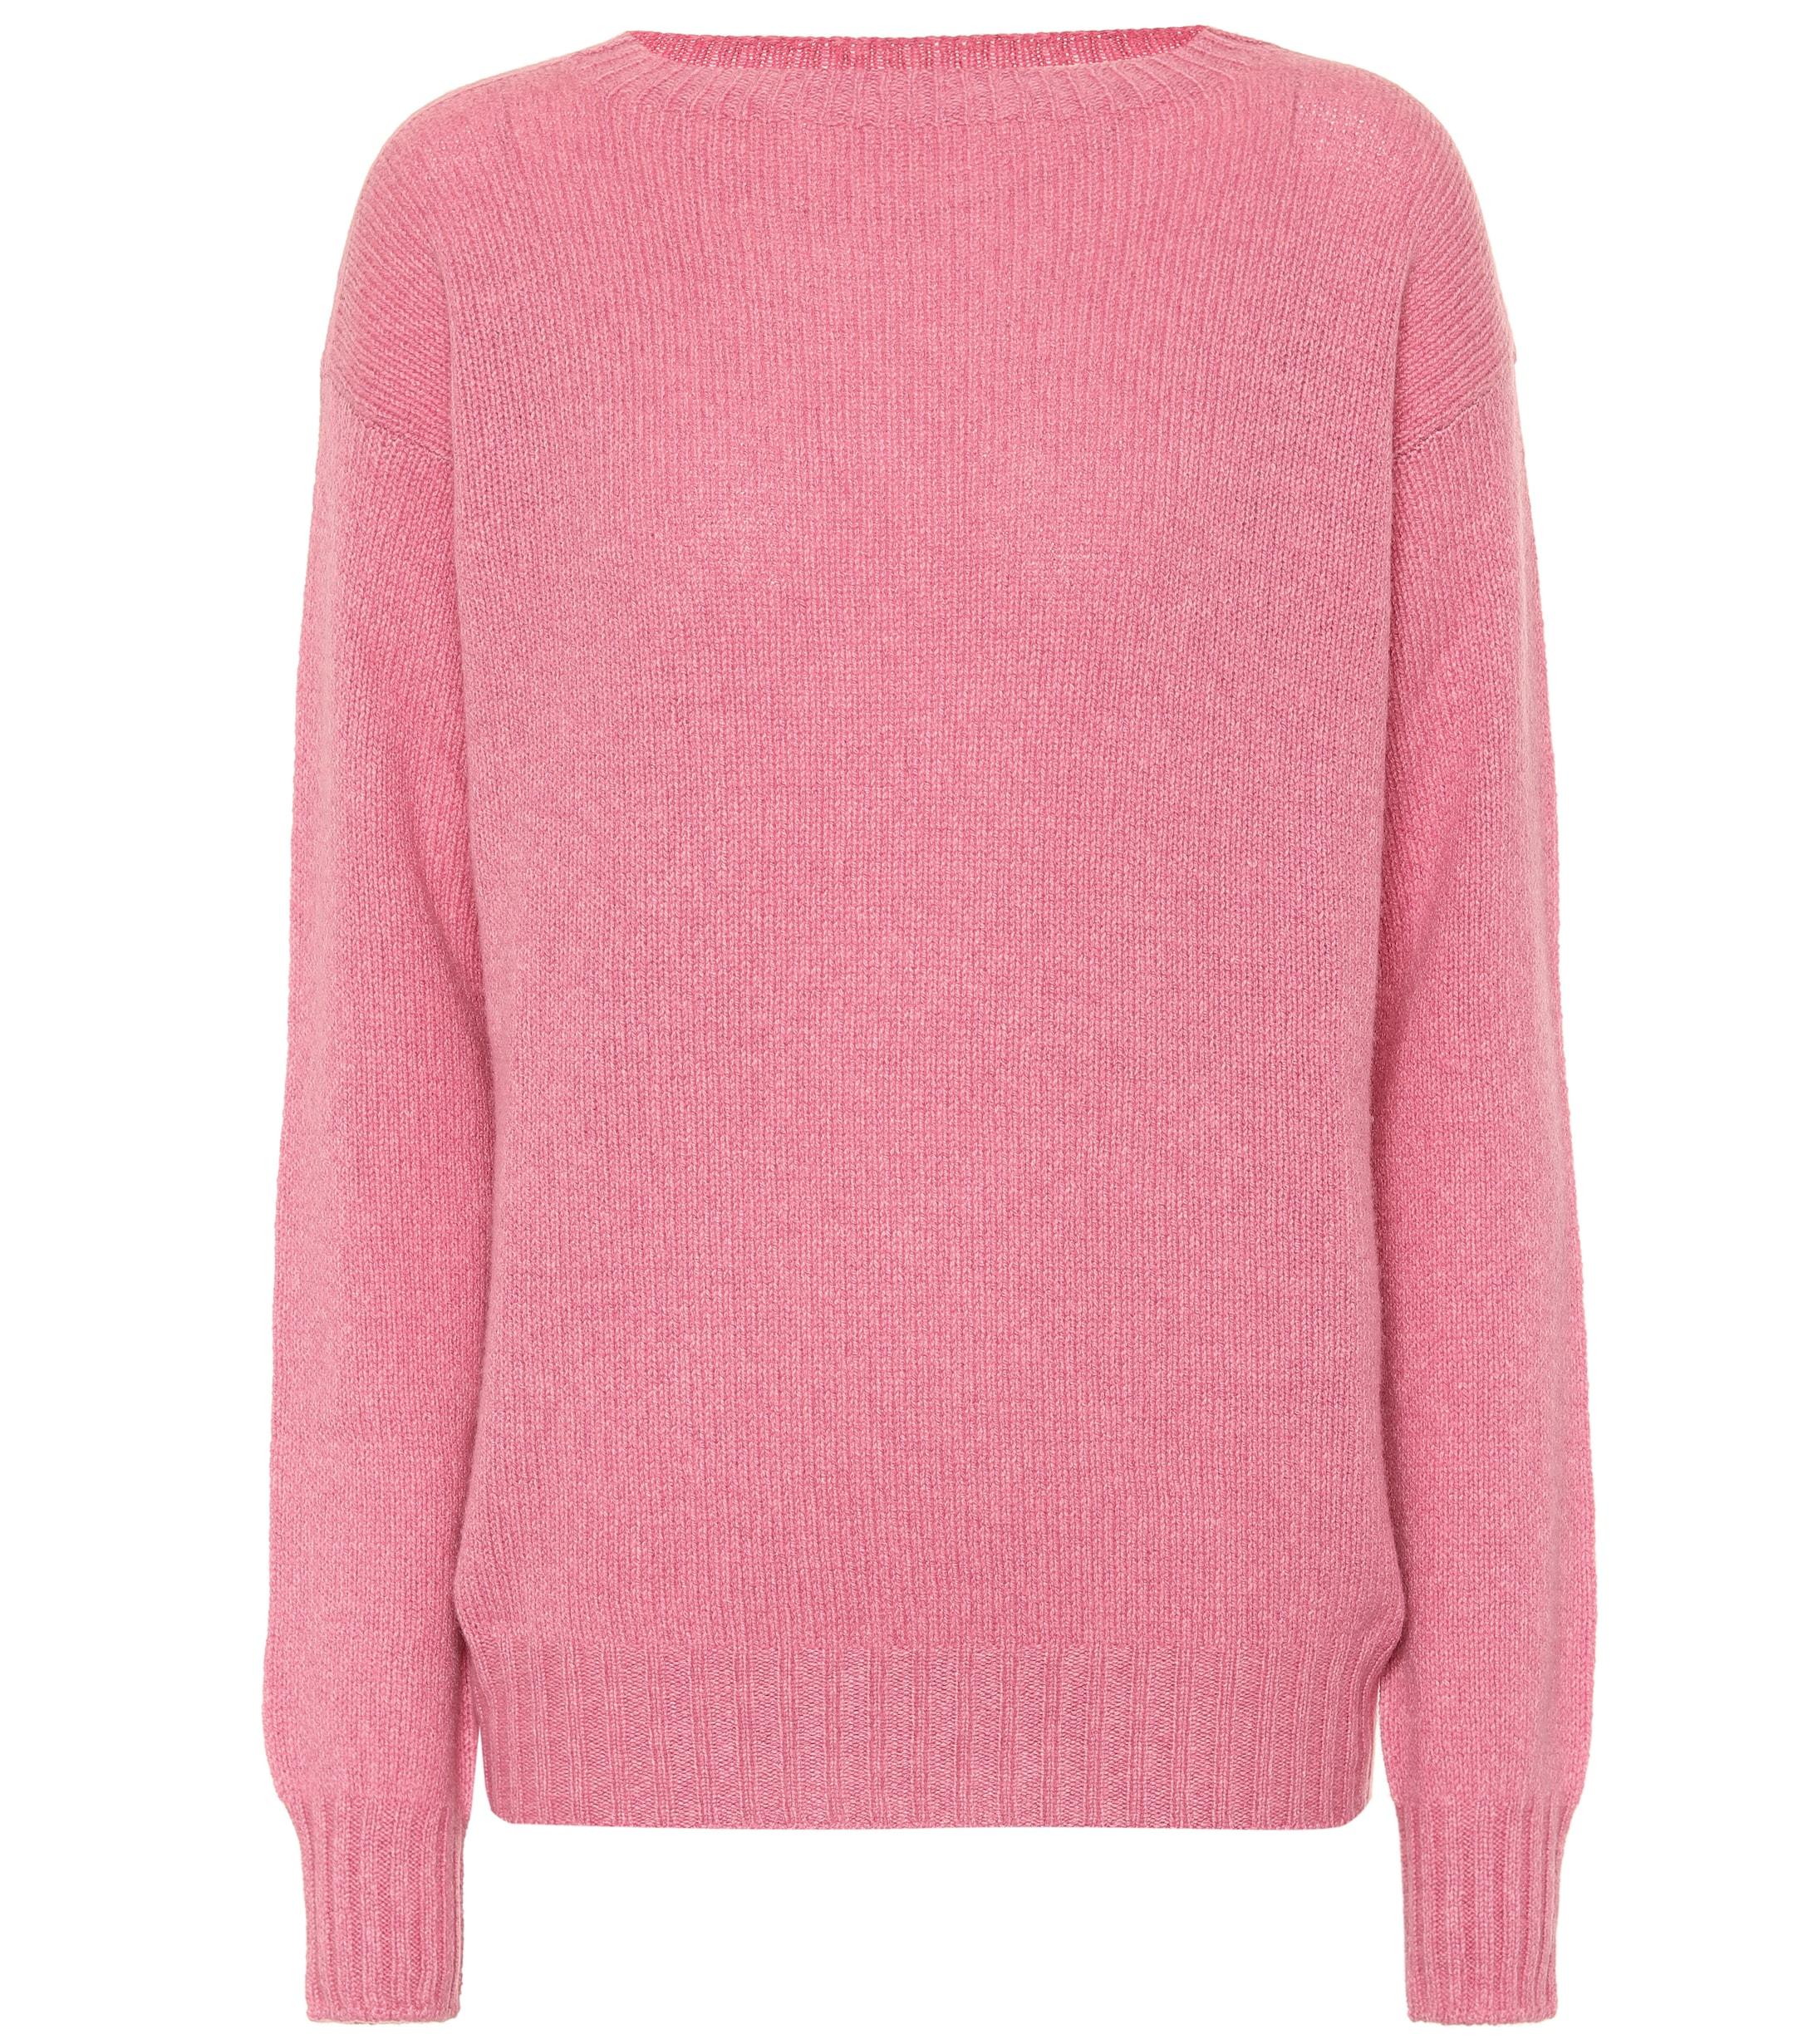 Prada Cashmere Sweater in Pink - Lyst